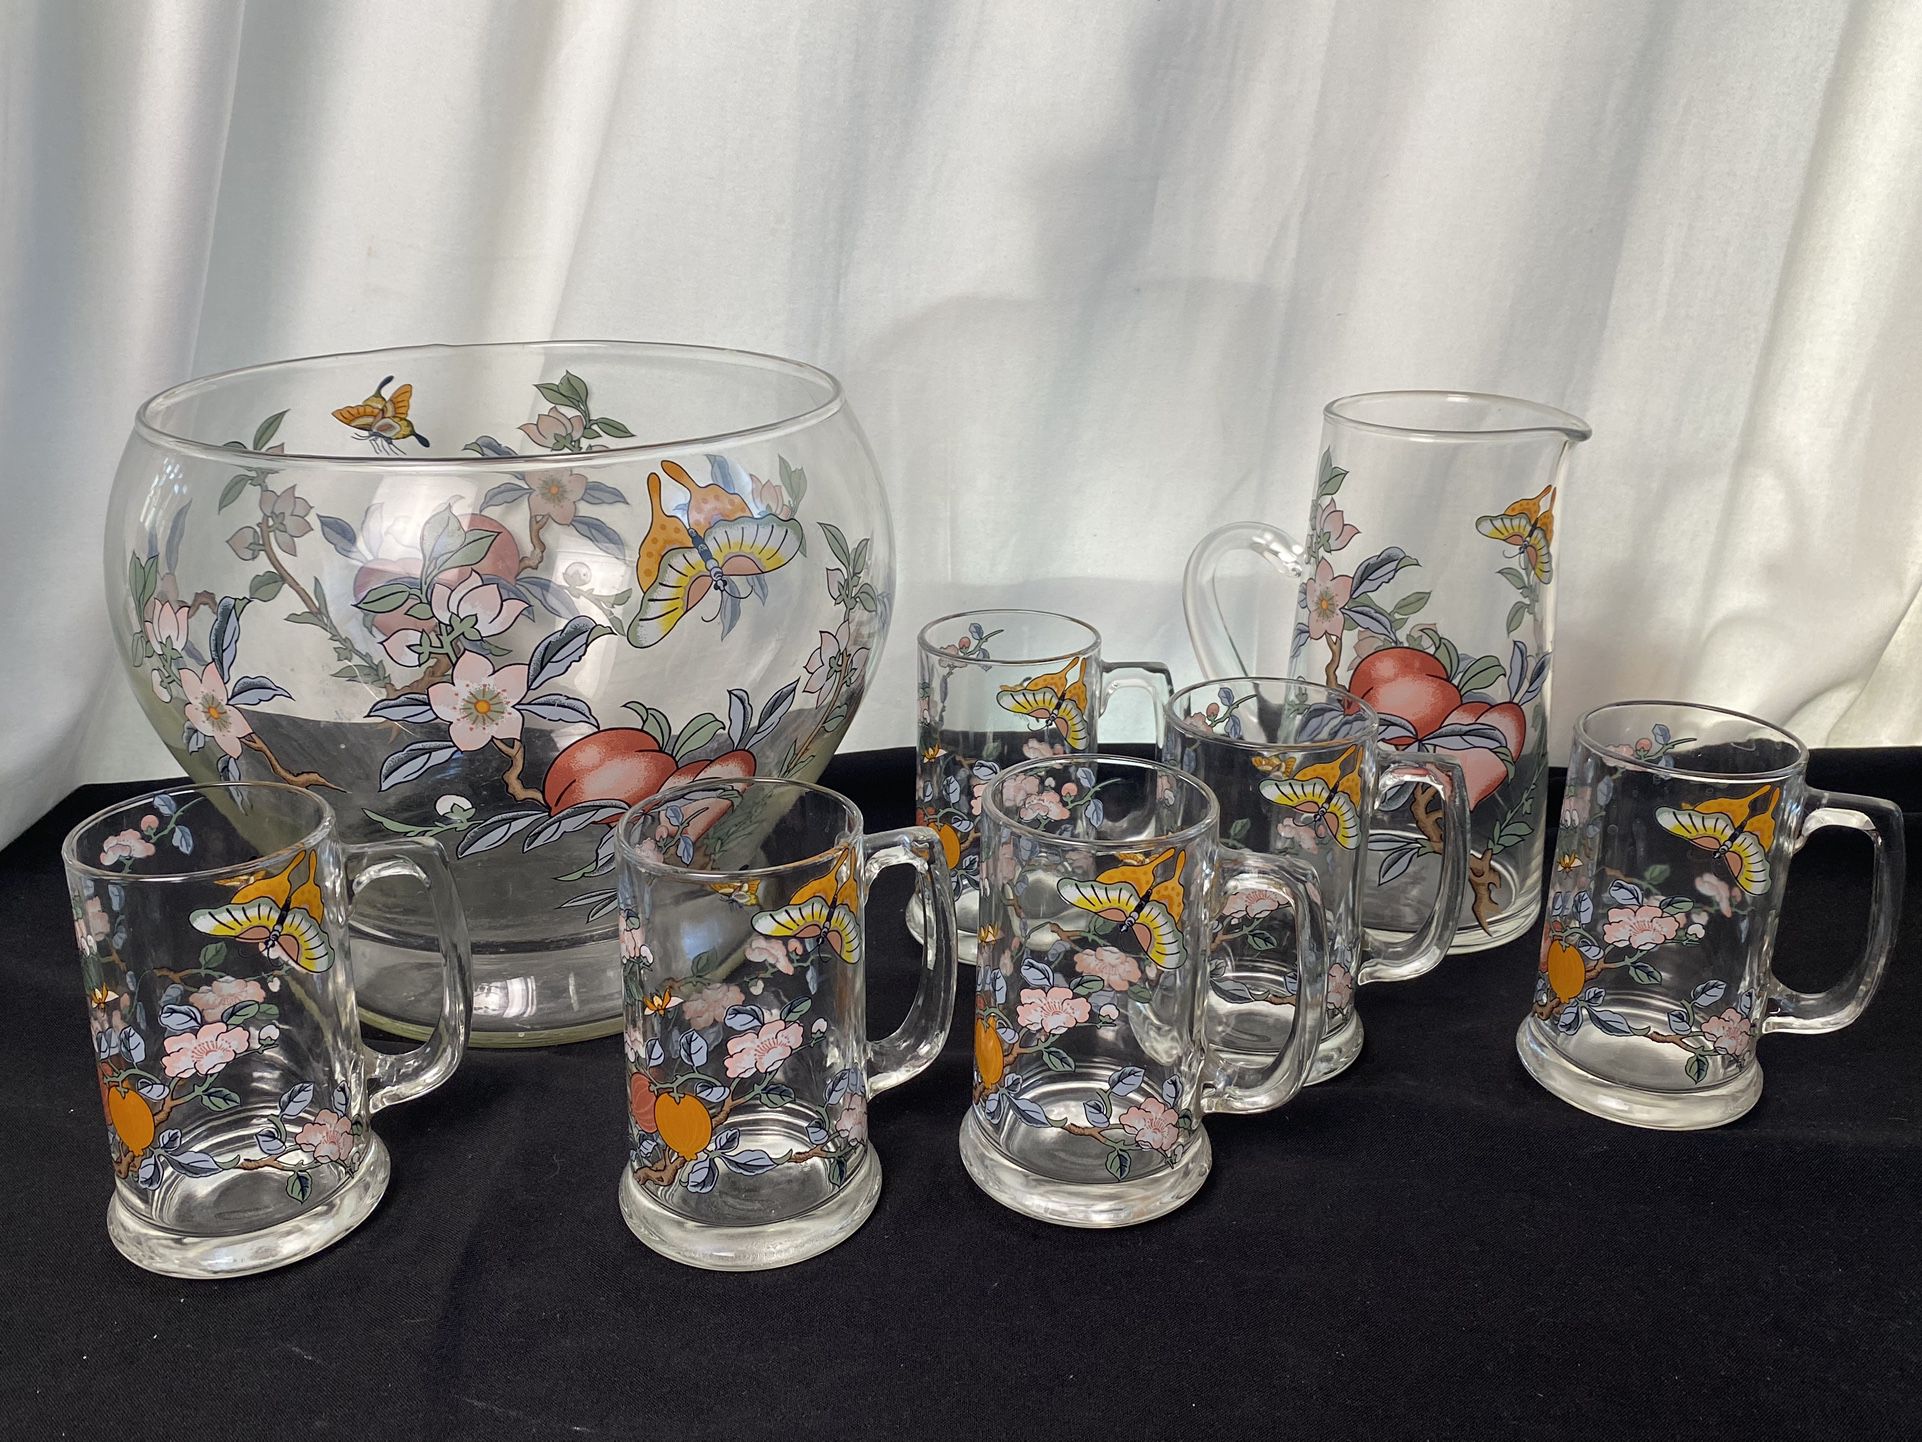 Vintage 8 piece Glass Punchbowl Set Floral Butterfly Design 6 mugs 1 pitcher & Bowl (Antique Glassware) Incredible Craftsmanship